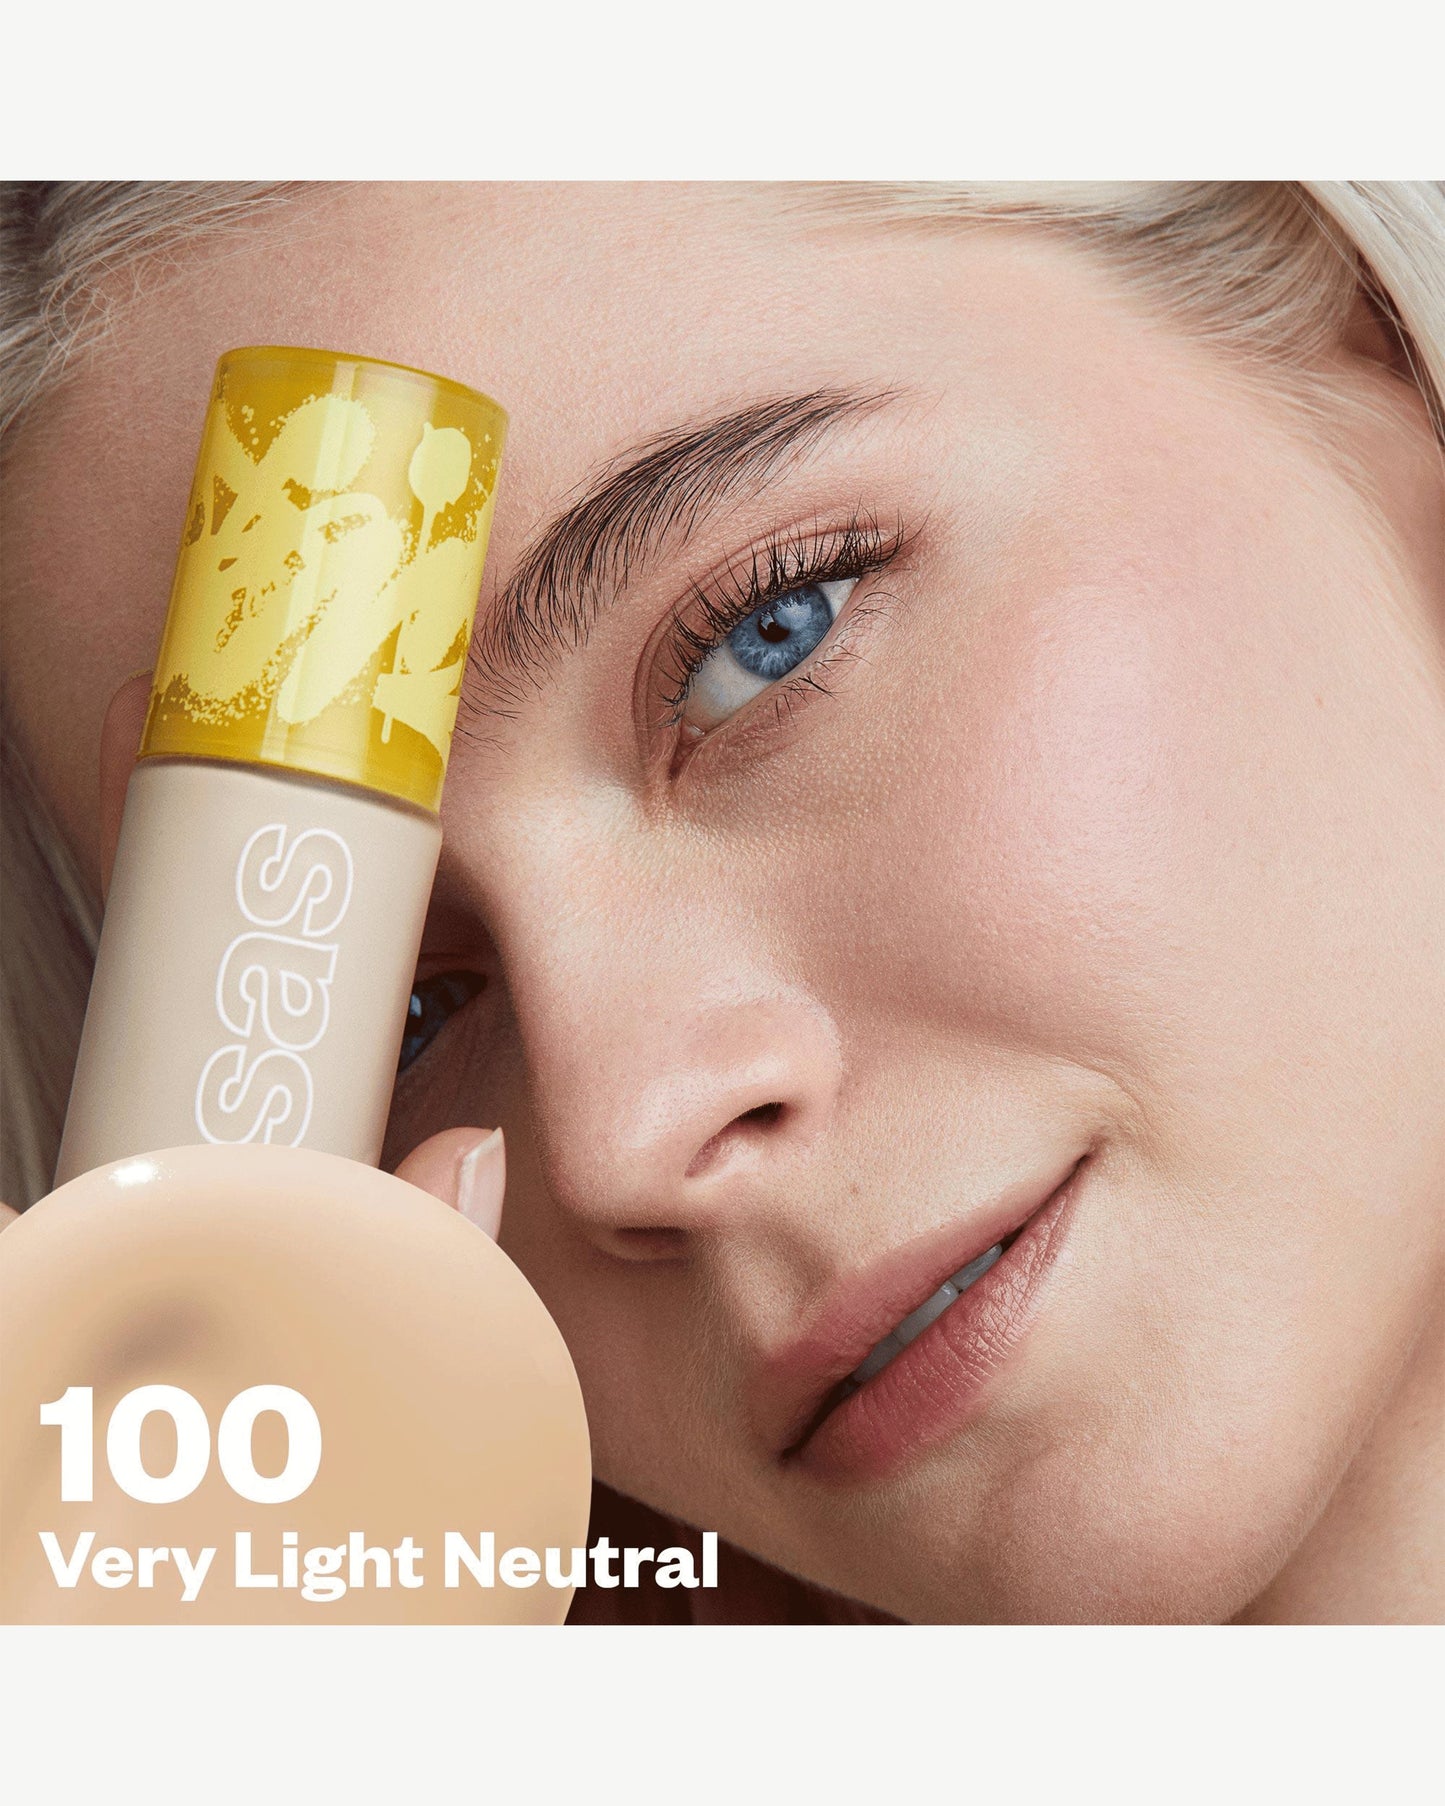 Very Light Neutral 100 (very light with neutral undertones)